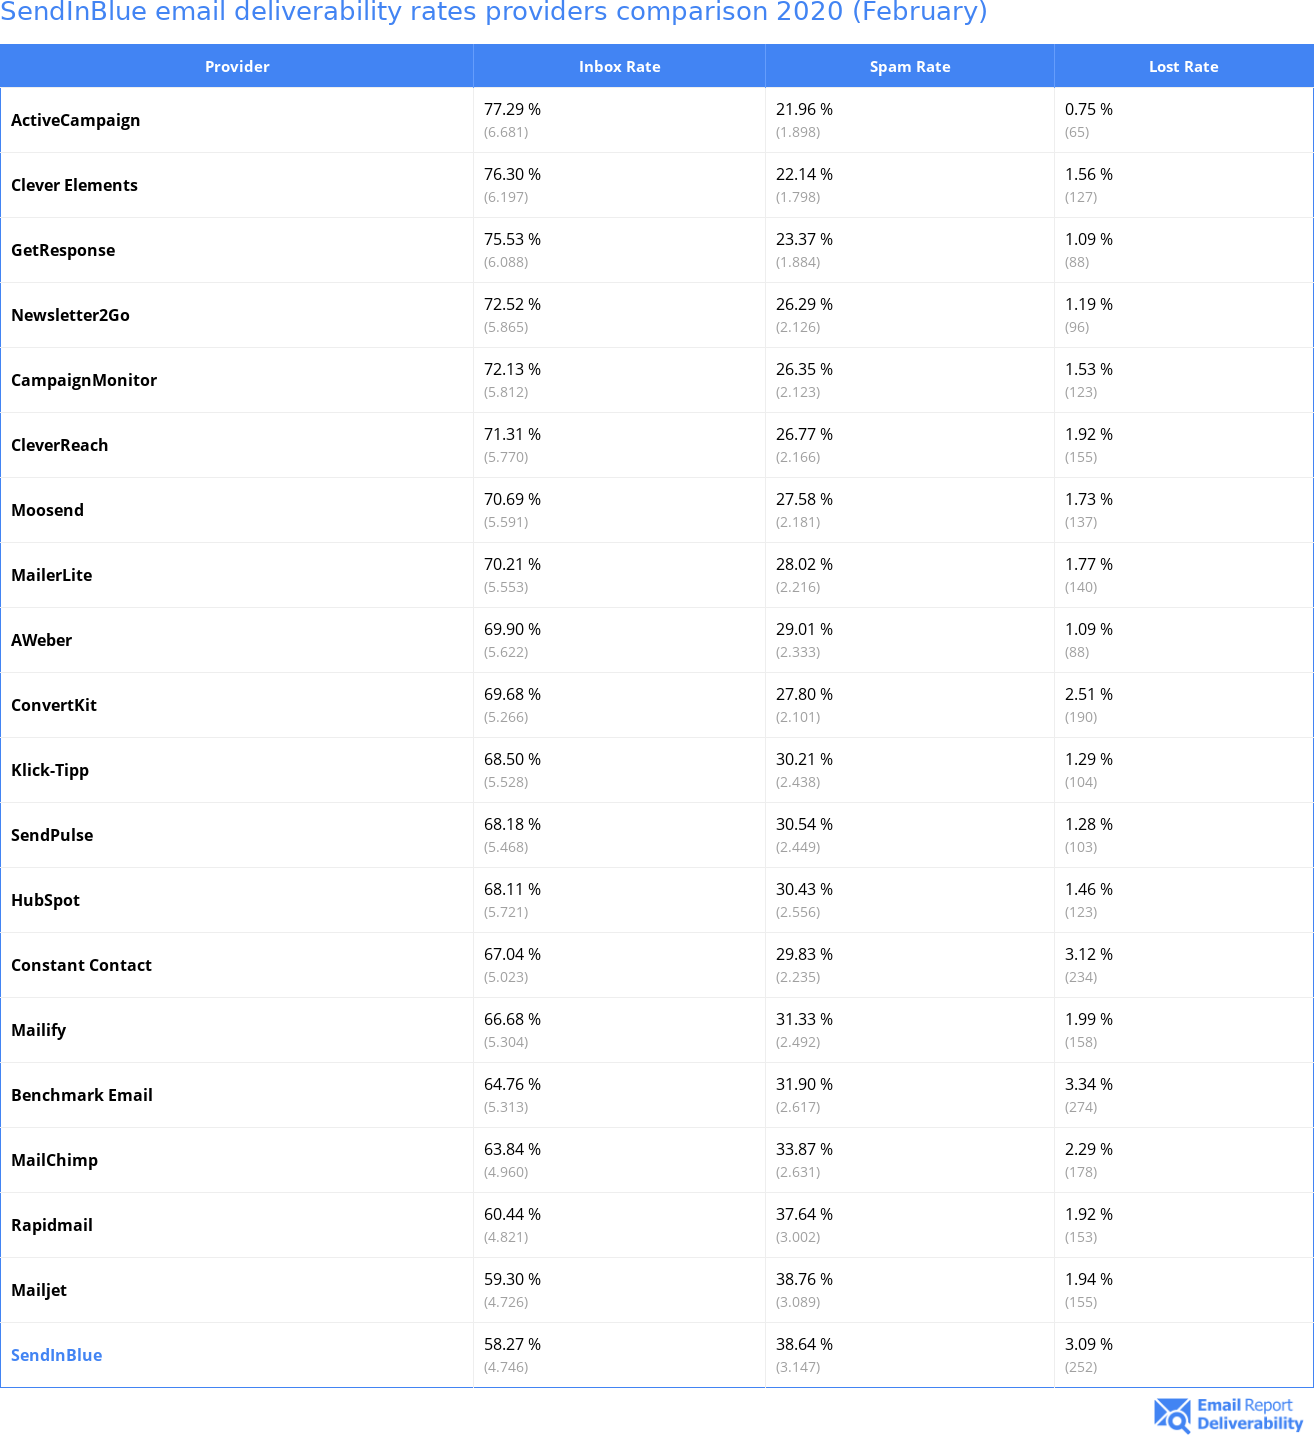 SendInBlue email deliverability rates providers comparison 2020 (February)